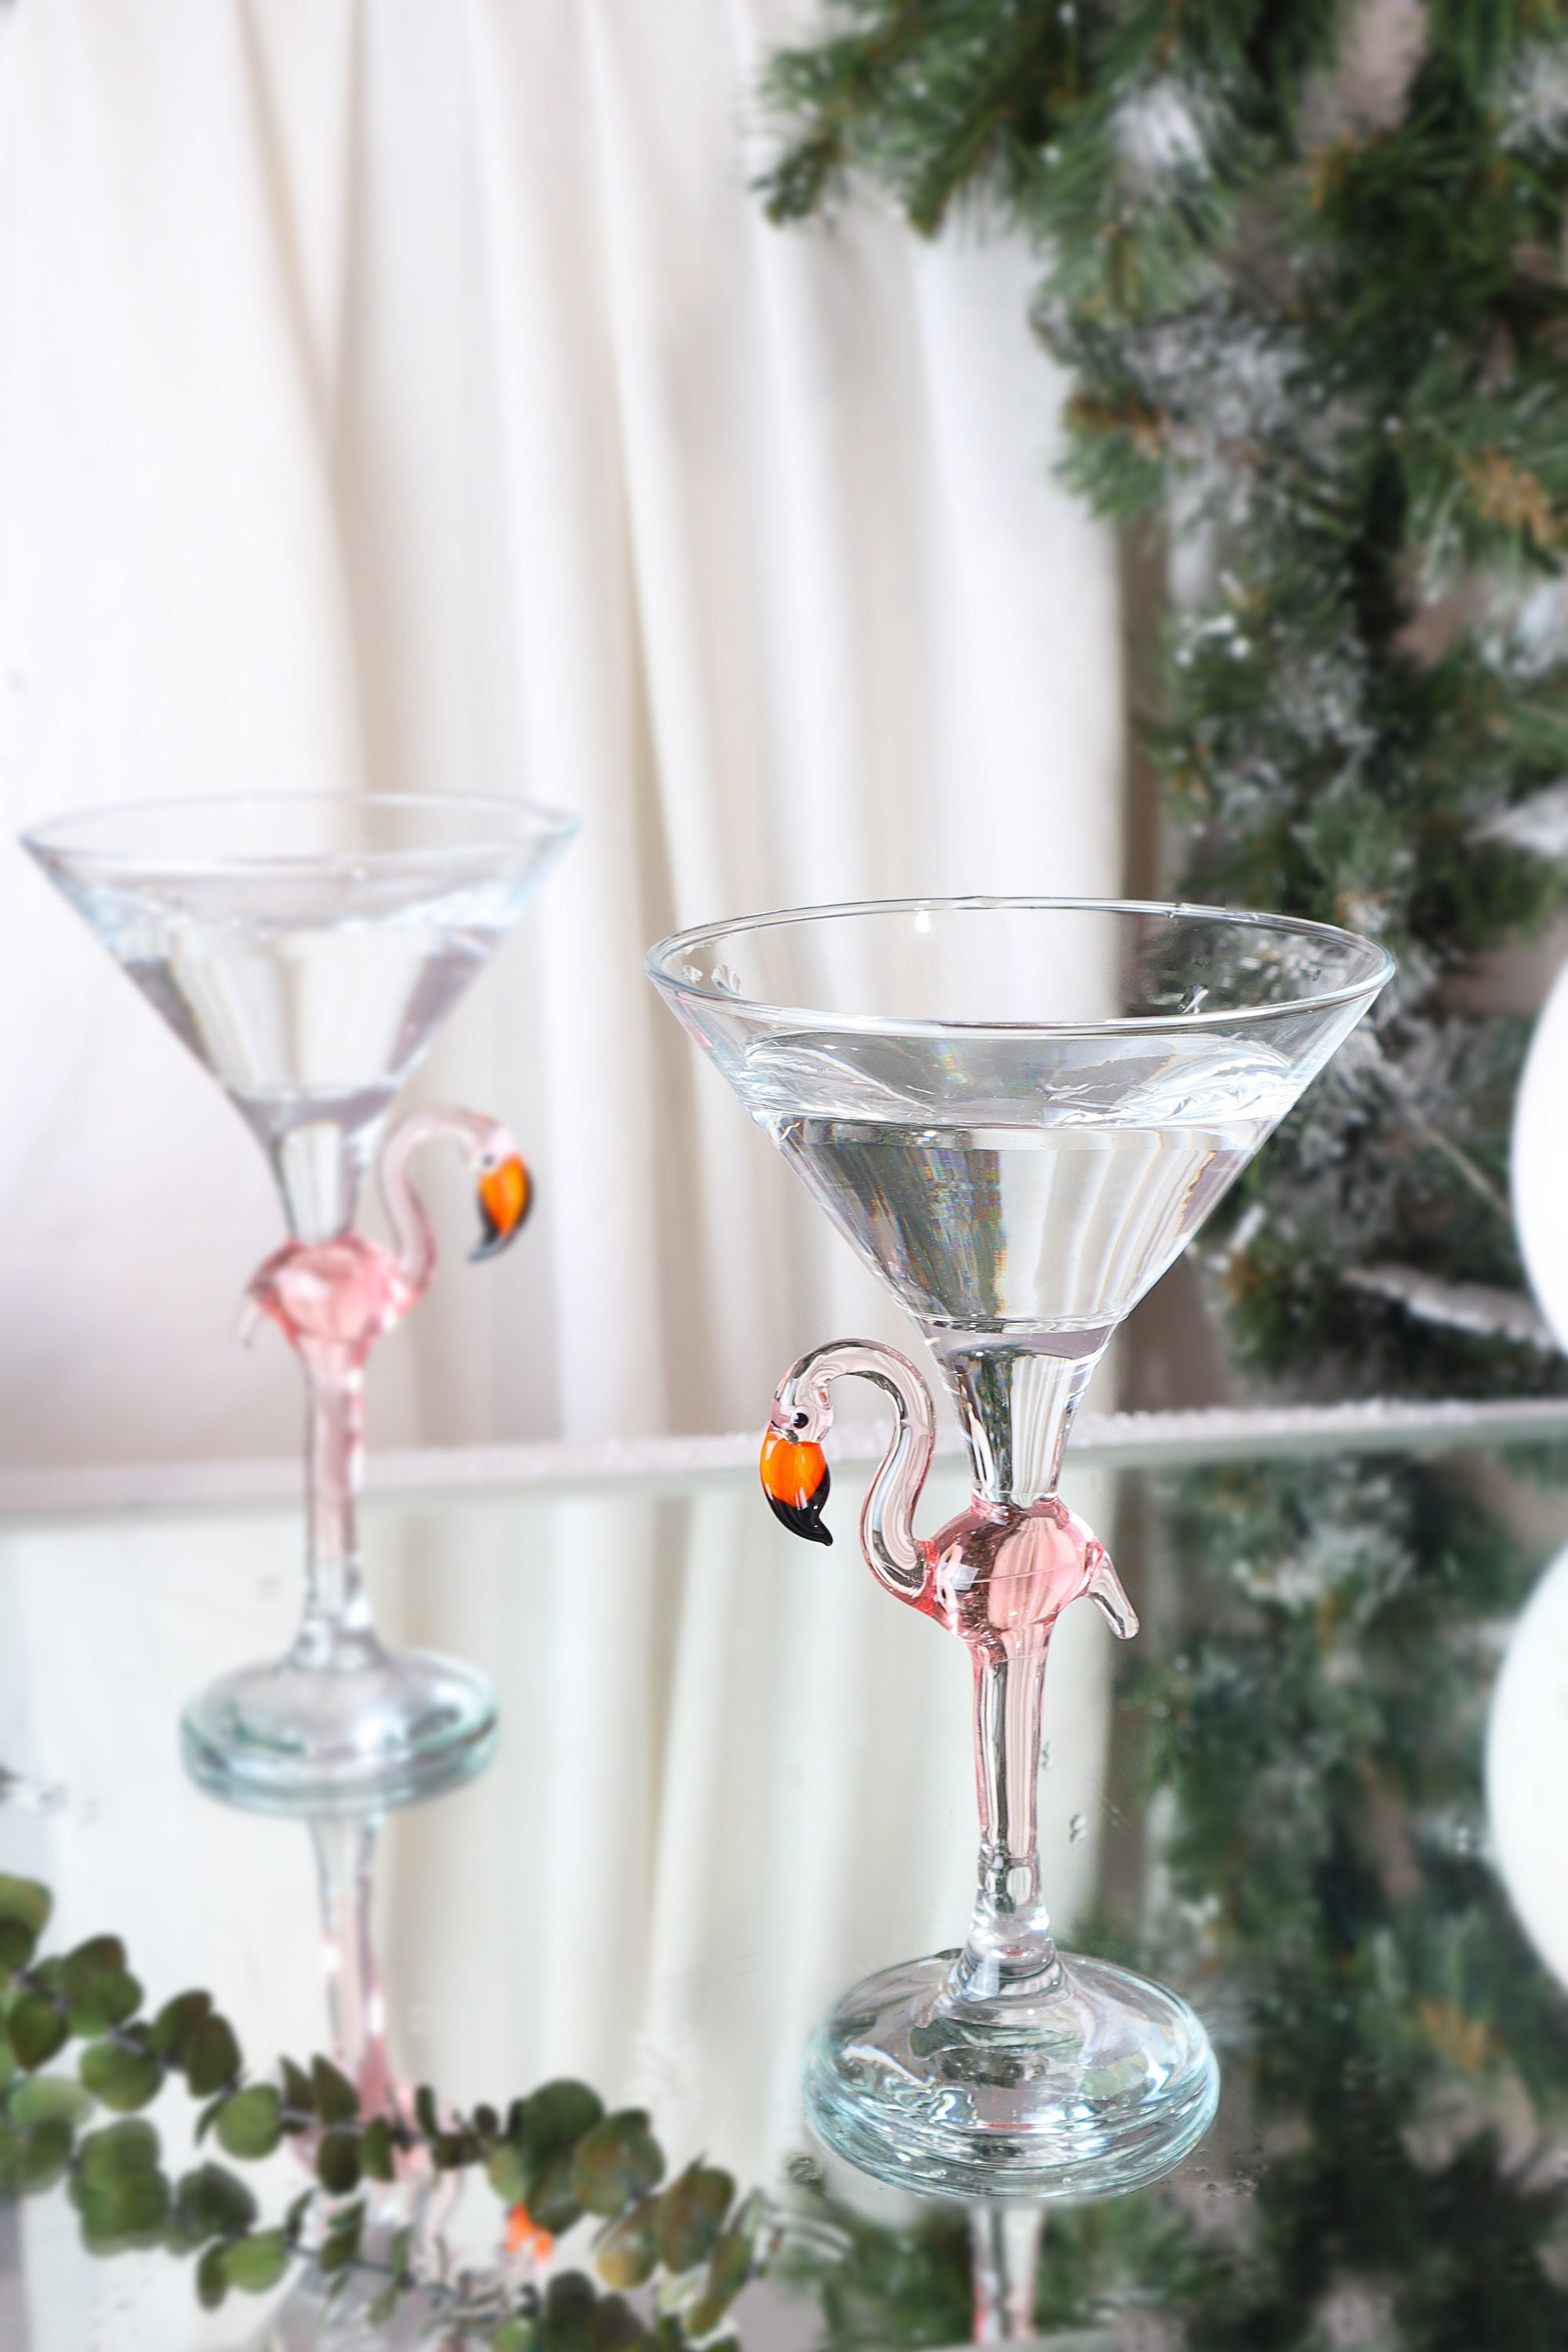 Umigy Set of 12 Martini Glasses 7oz Crystal Stemless Cocktail Glasses  Vintage Bar Glasses with Base …See more Umigy Set of 12 Martini Glasses 7oz